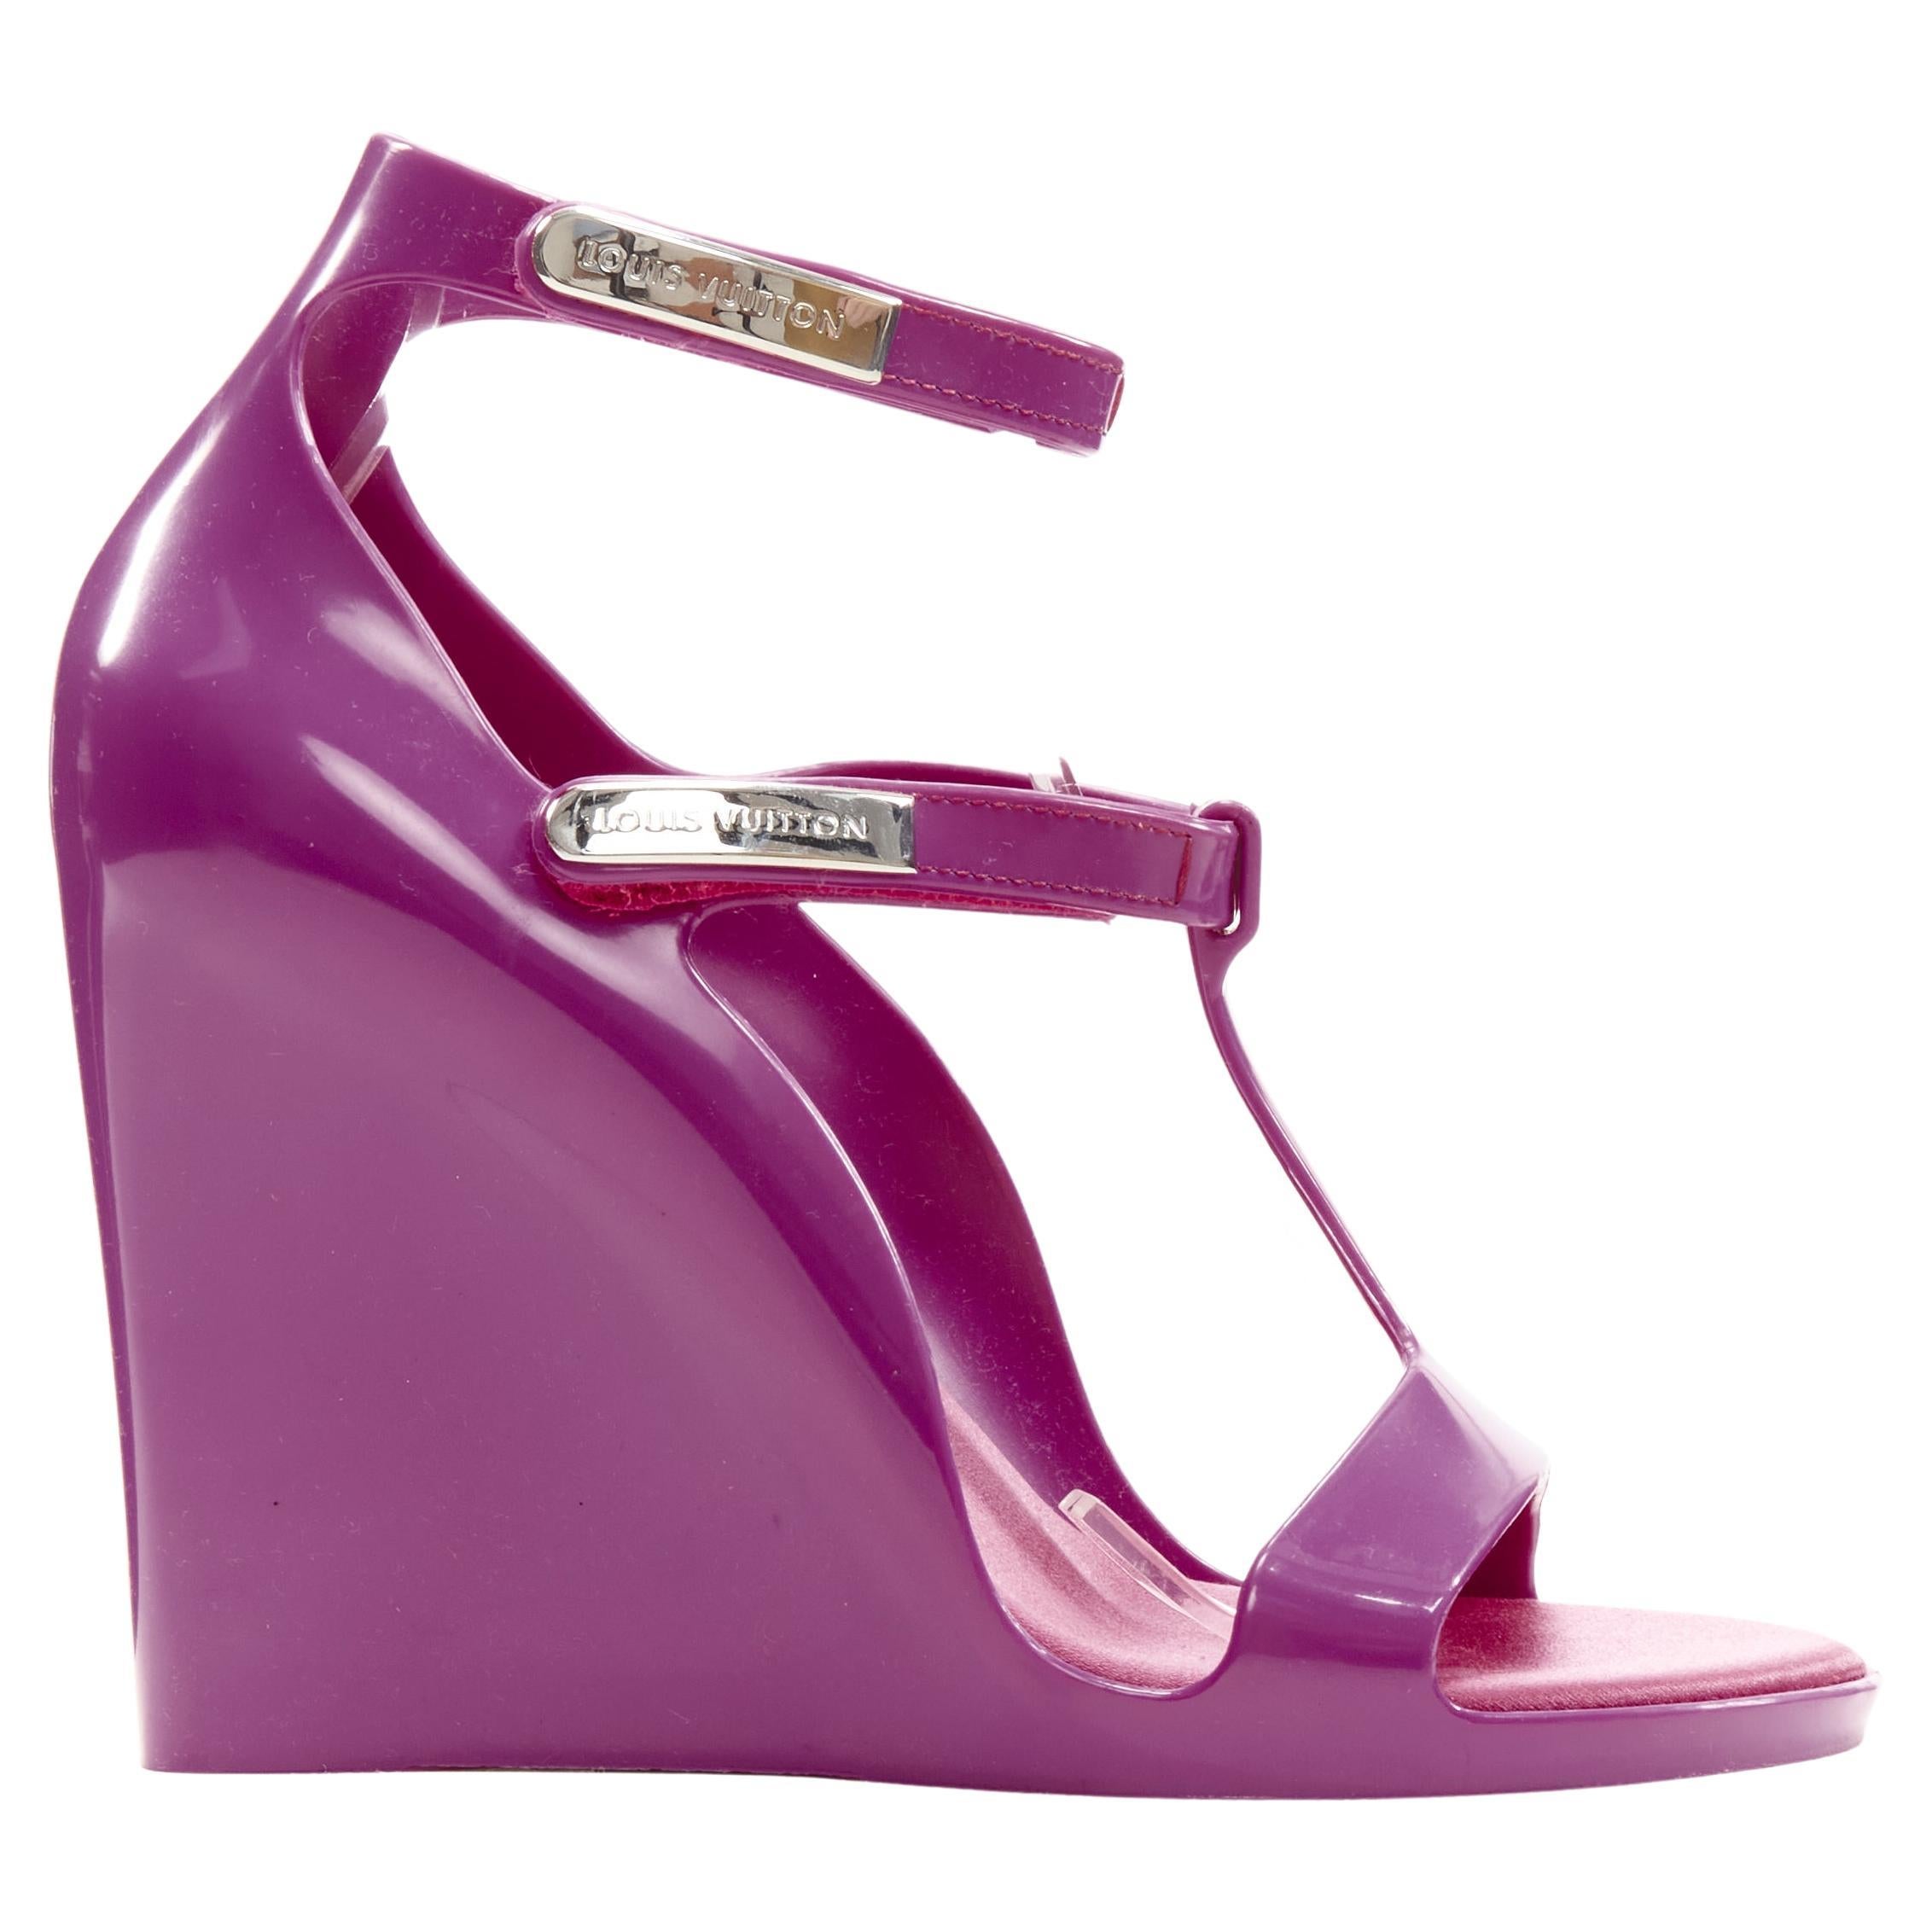 Louis Vuitton Pink Rubber Slingback Sandals6.5